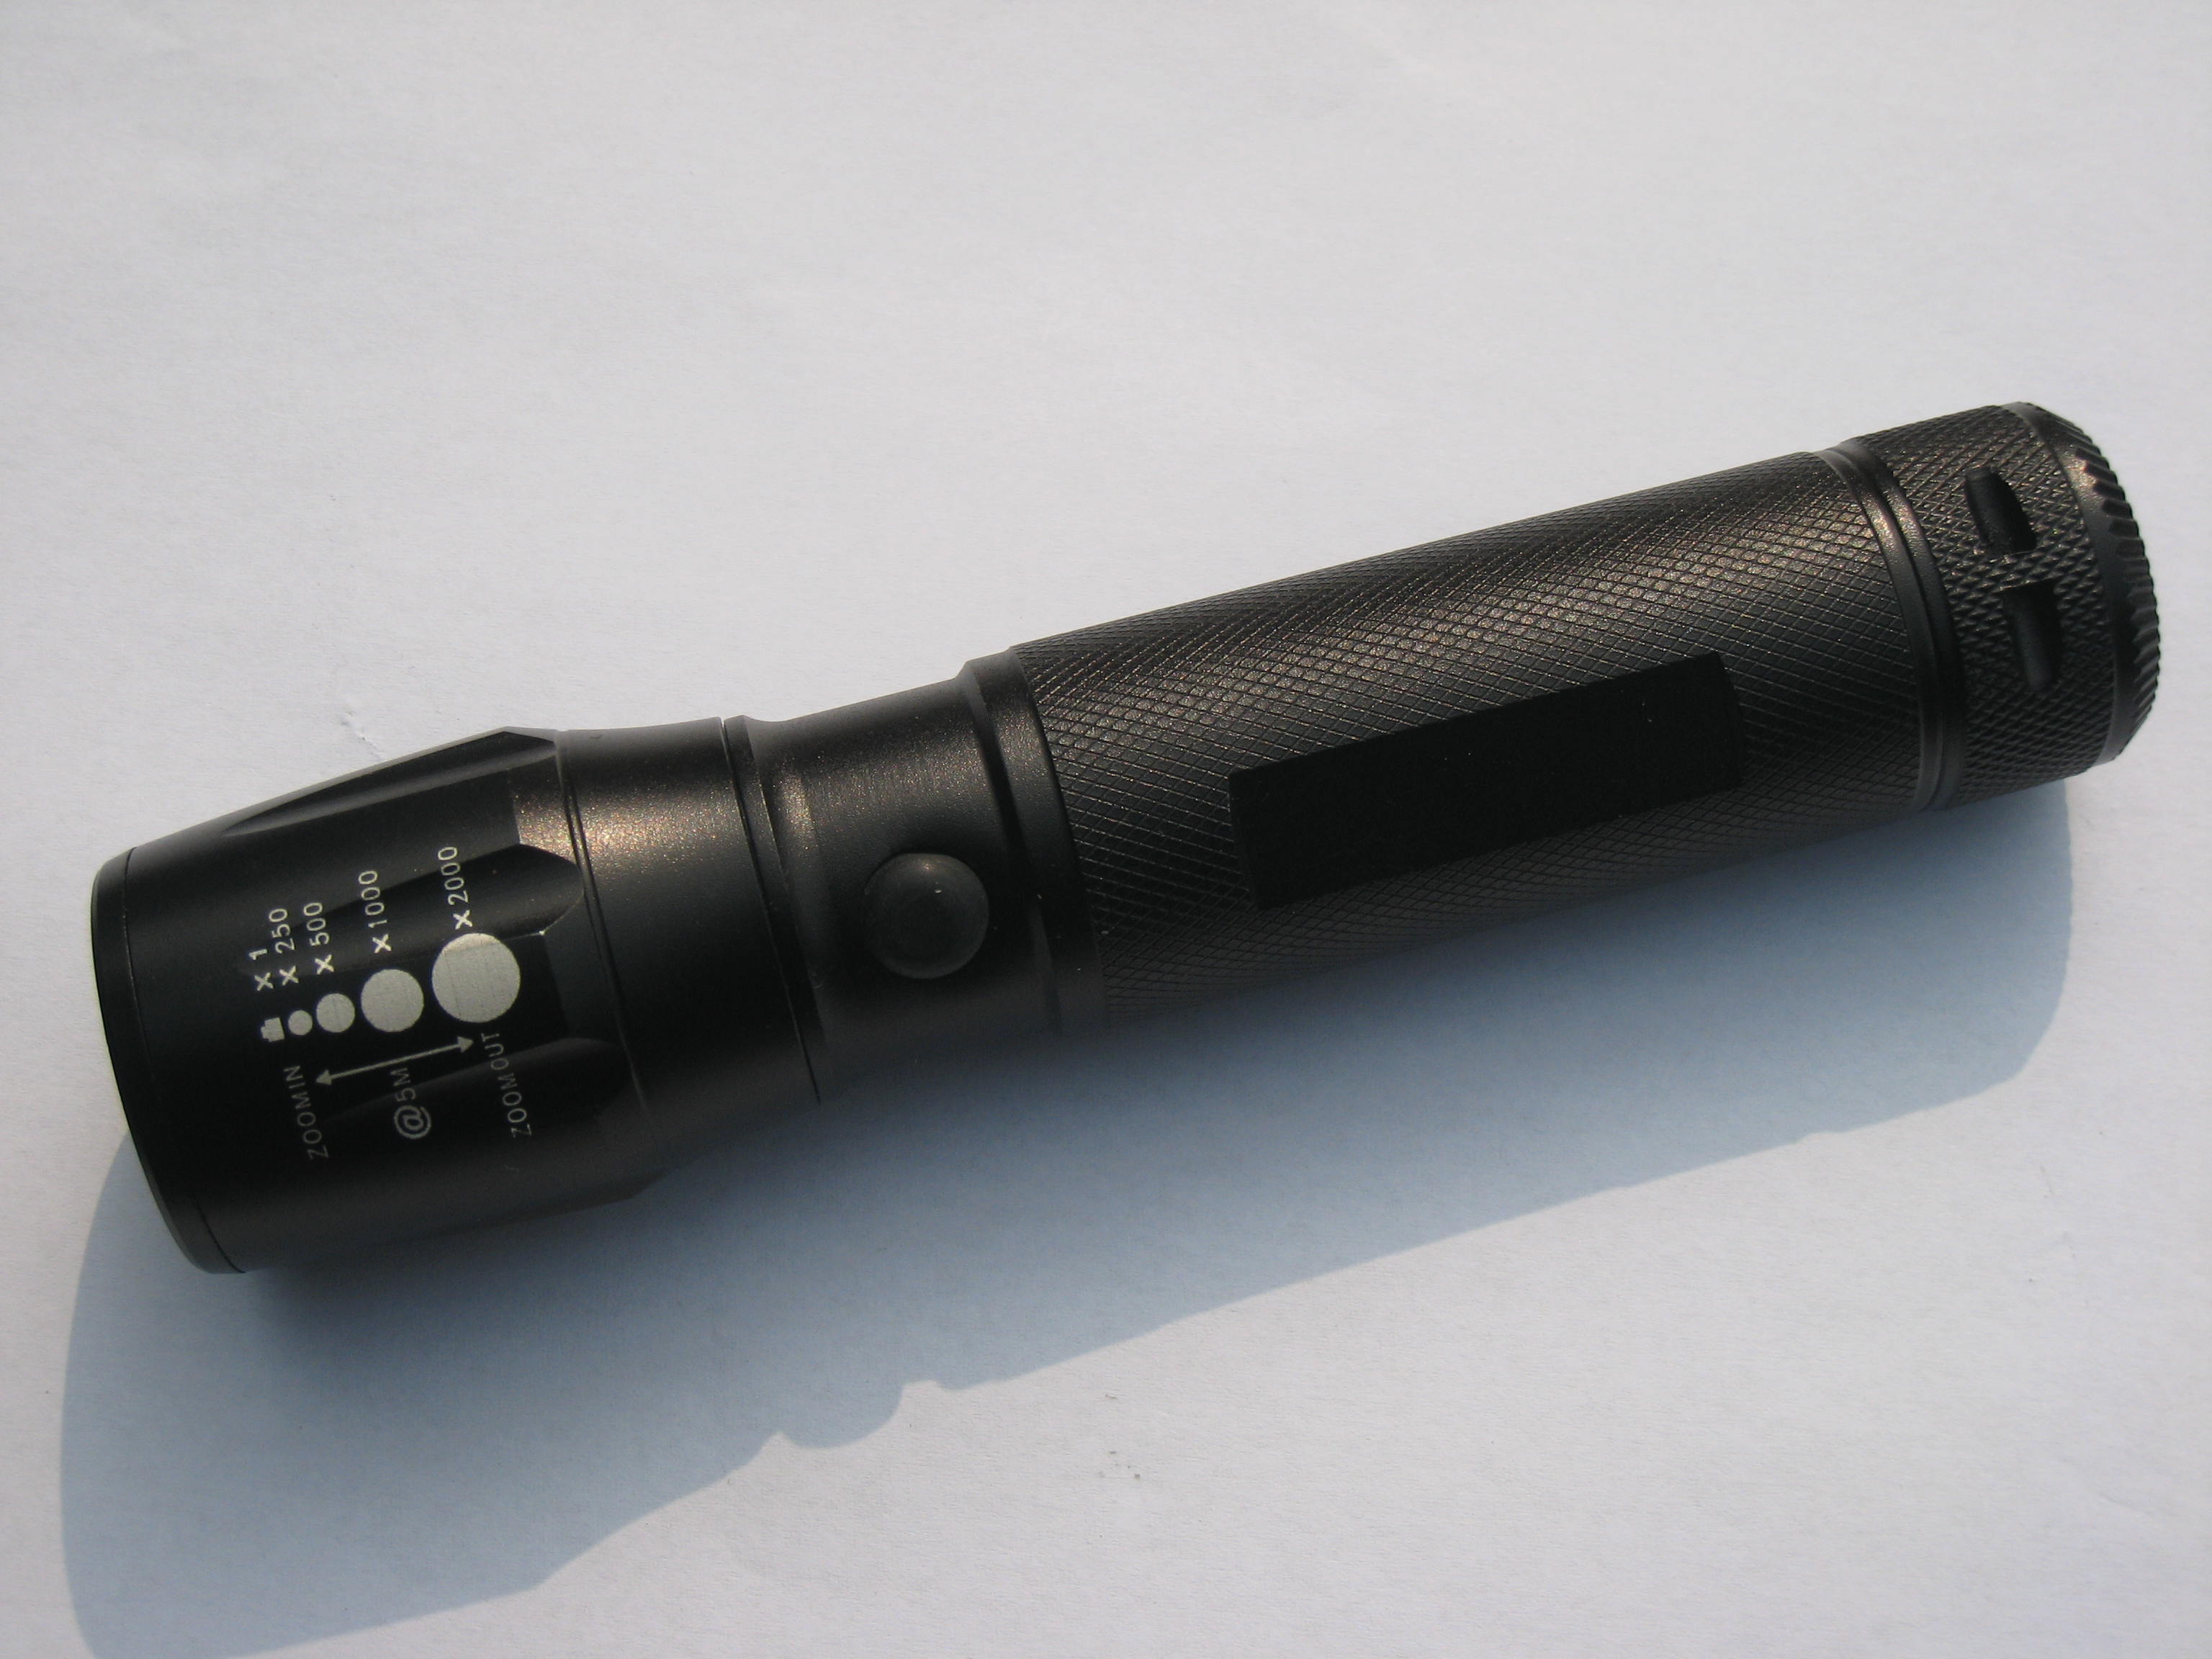 CREE Q5 led flashlight,high power led flashlight,zoom flashlight